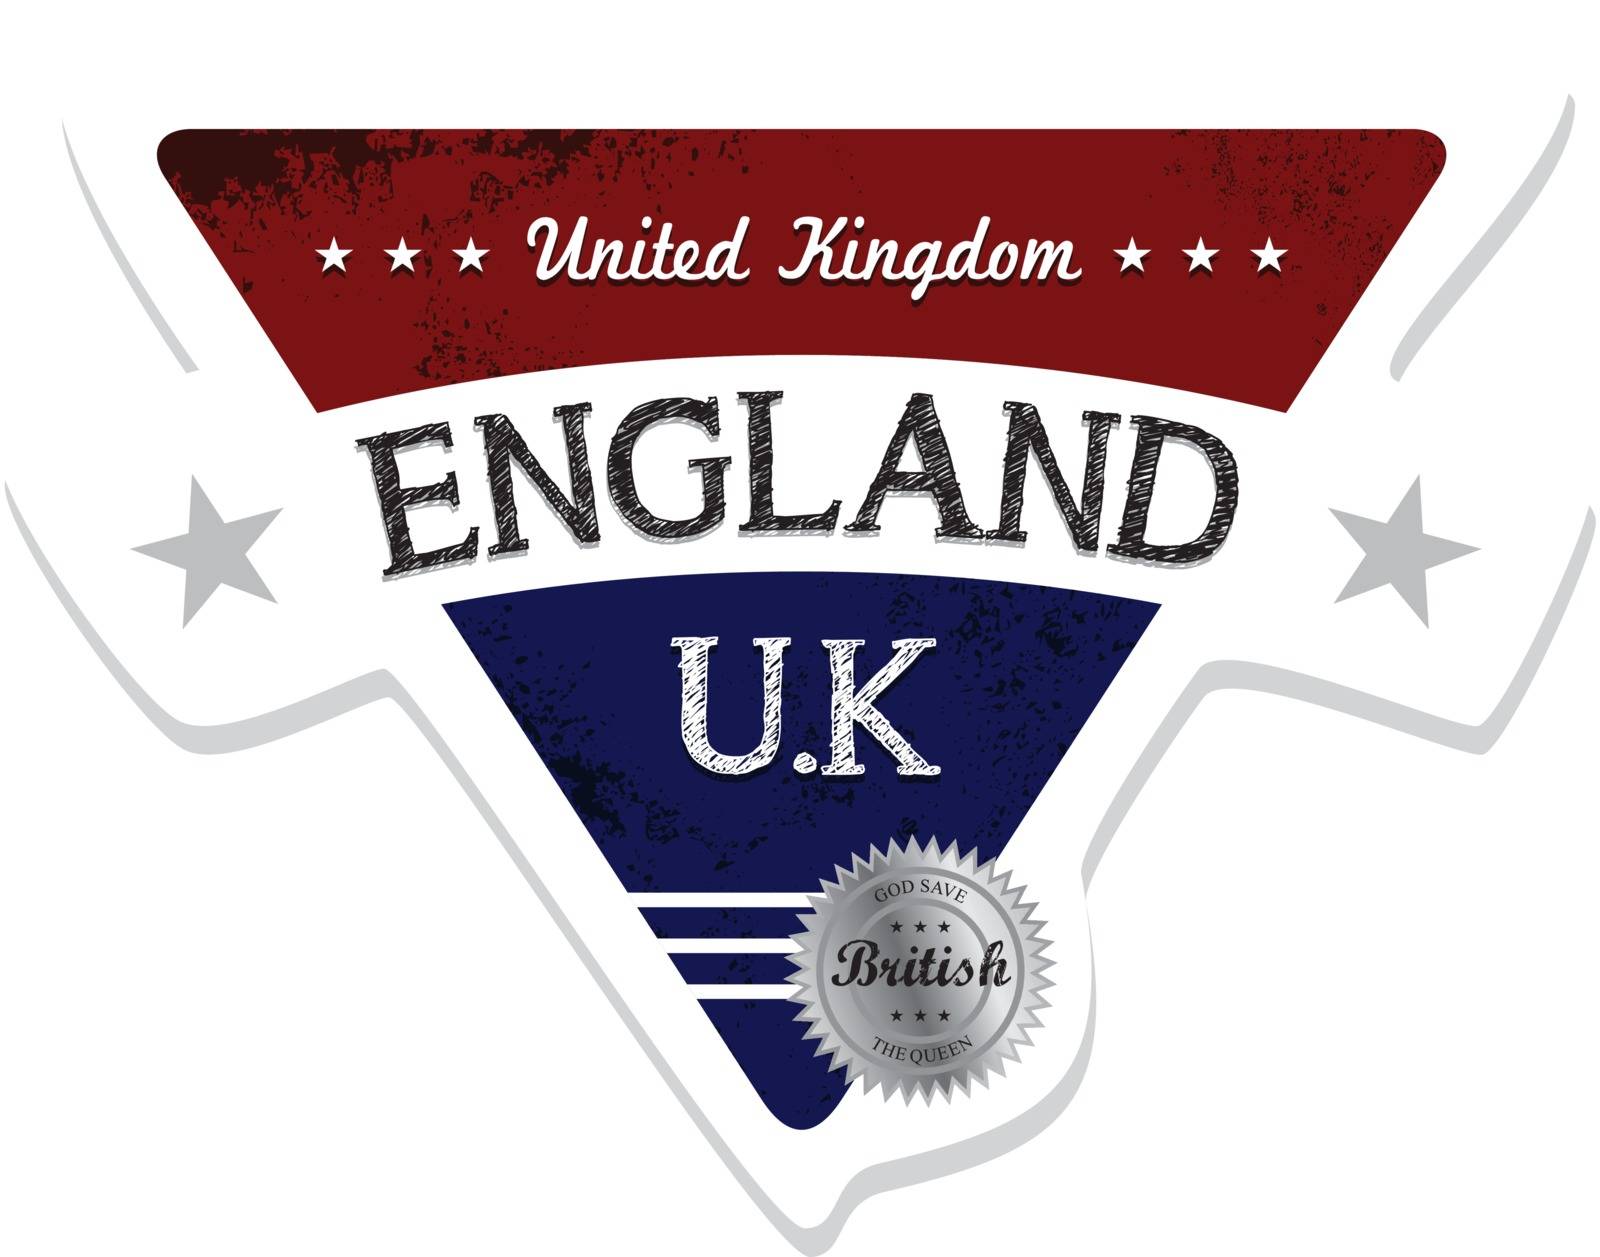 england emblem graphic art vector illustration design